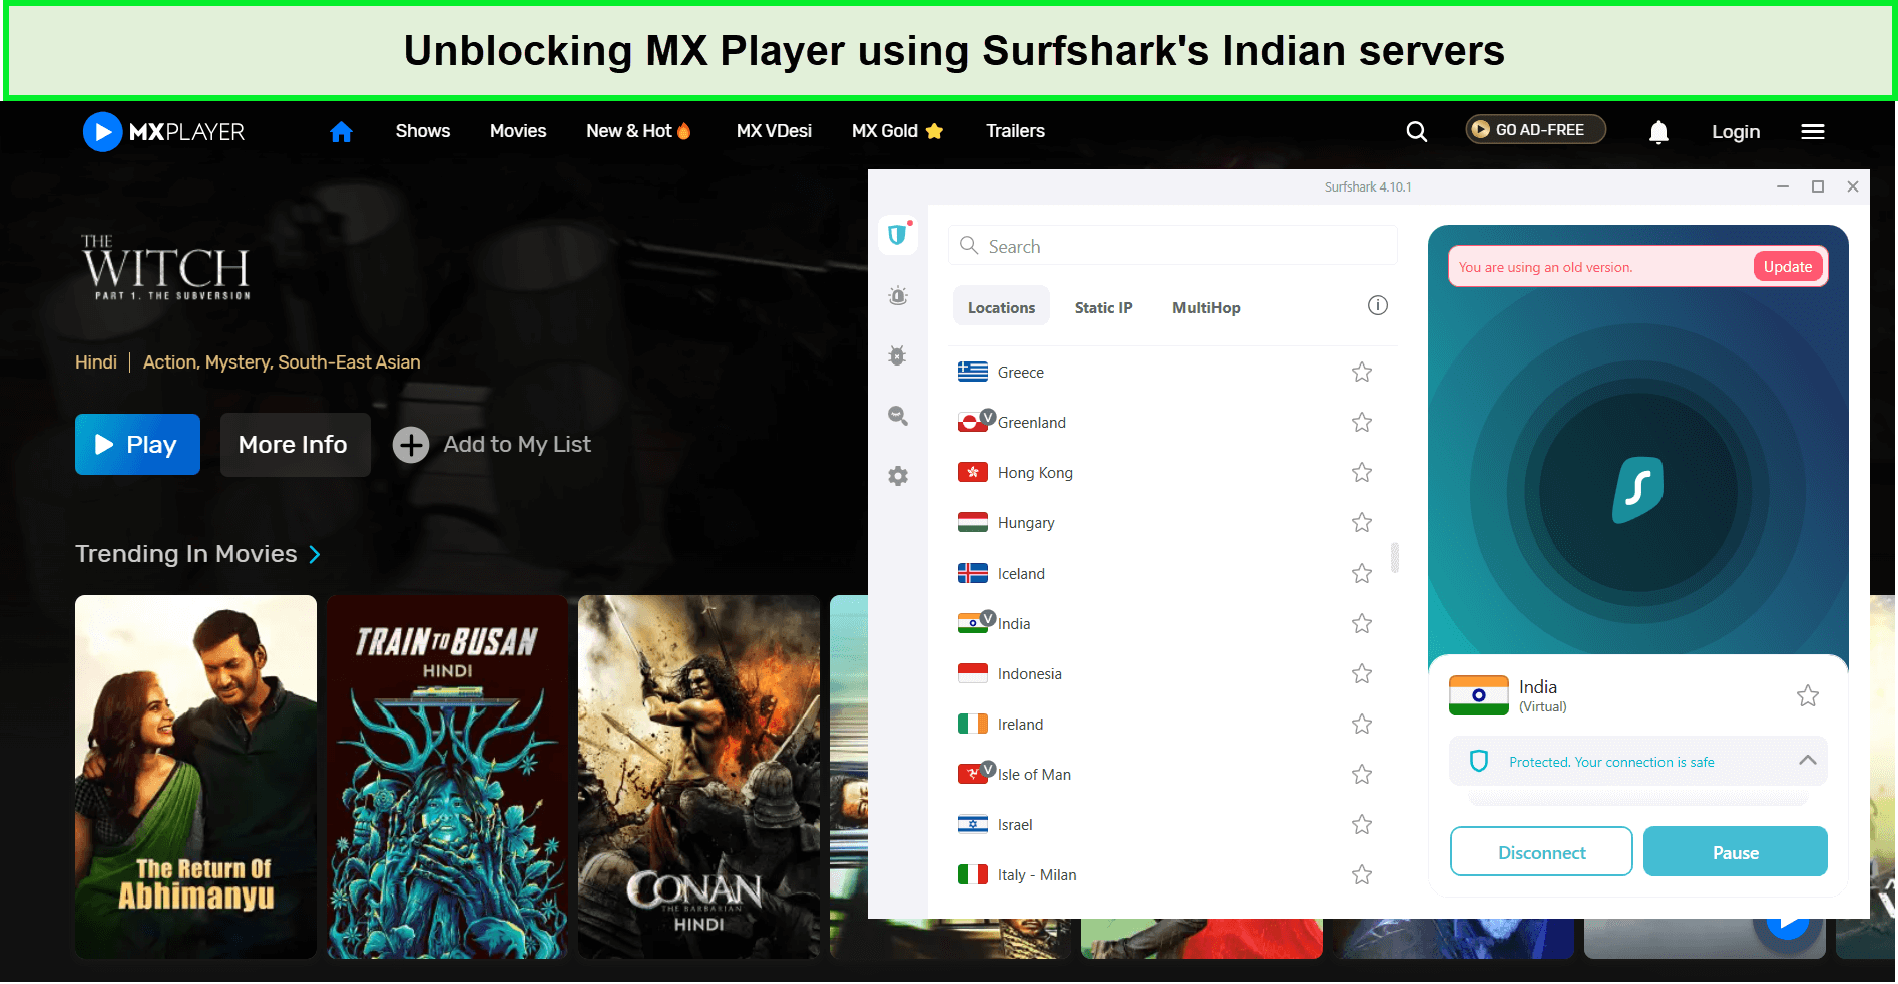 mx-player-in-New Zealand-unblocked-surfshark